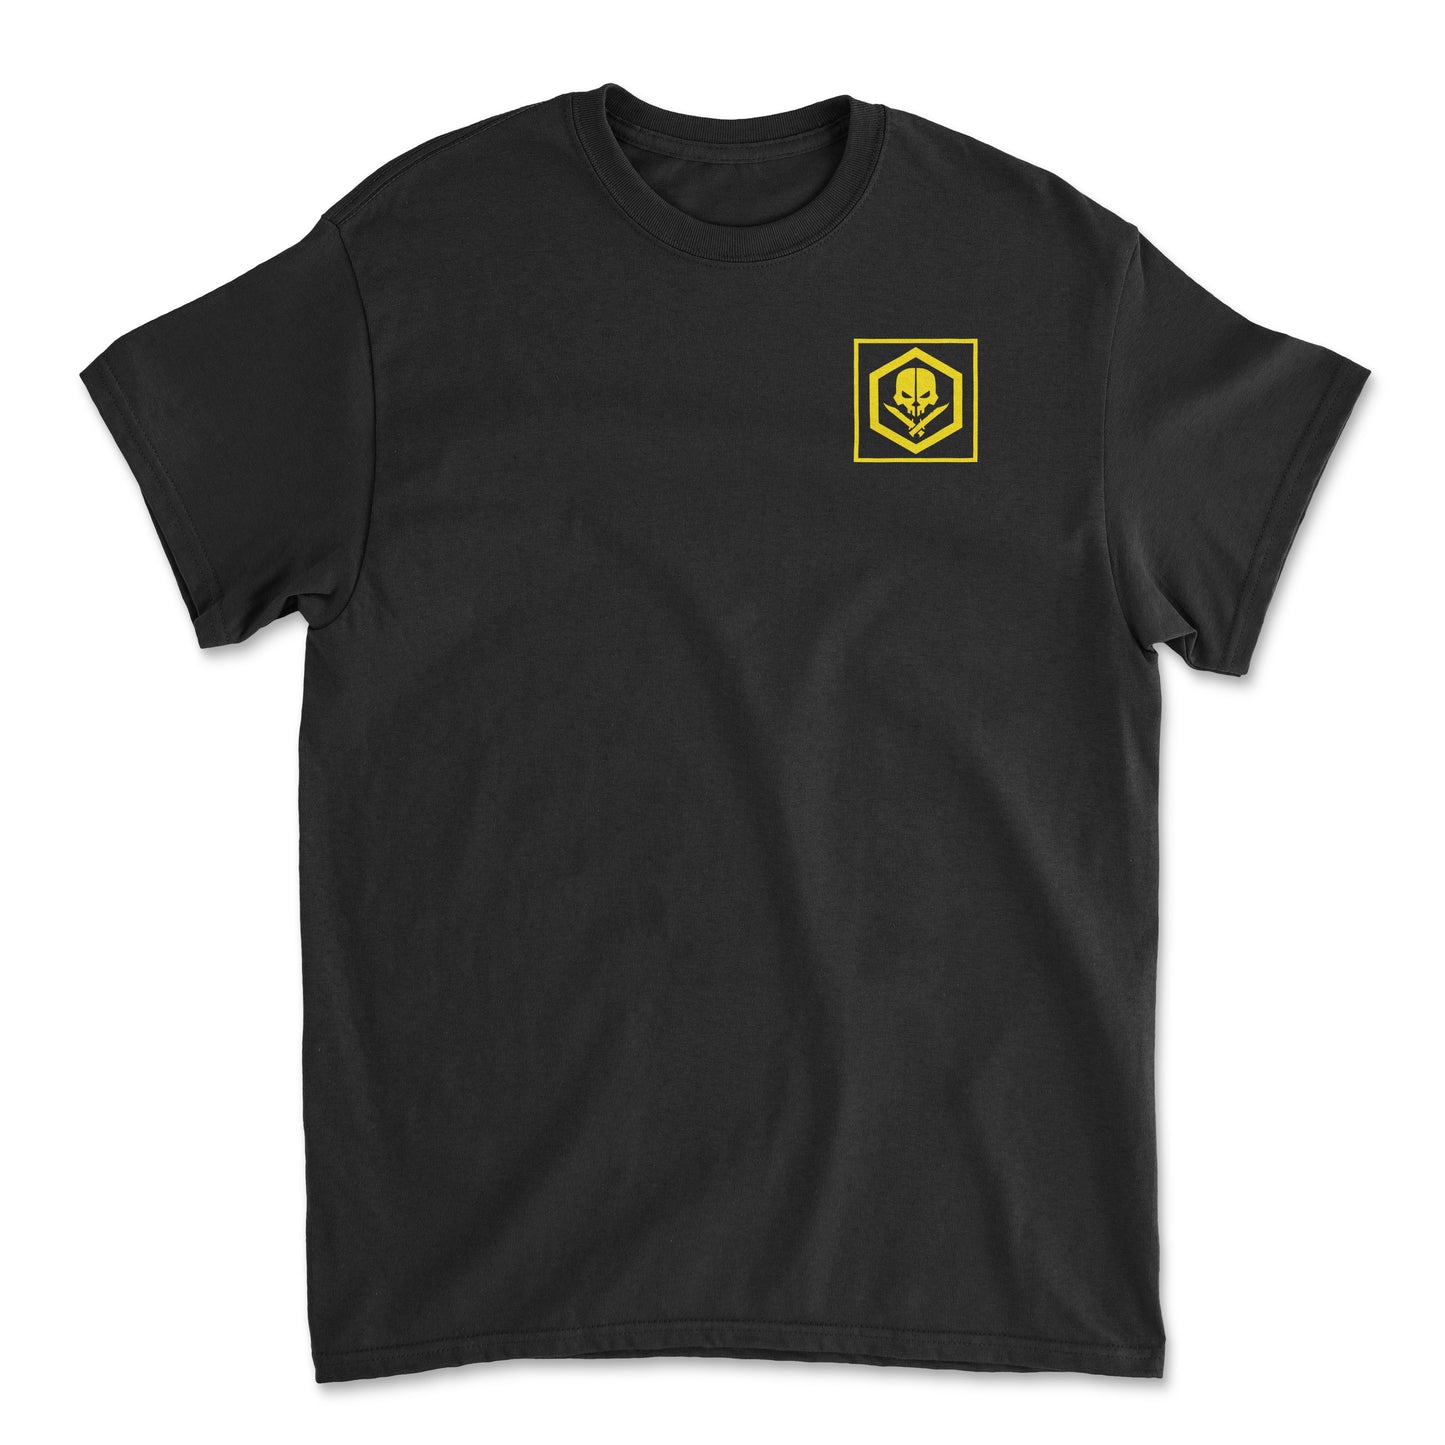 Tacticalbox T-shirt